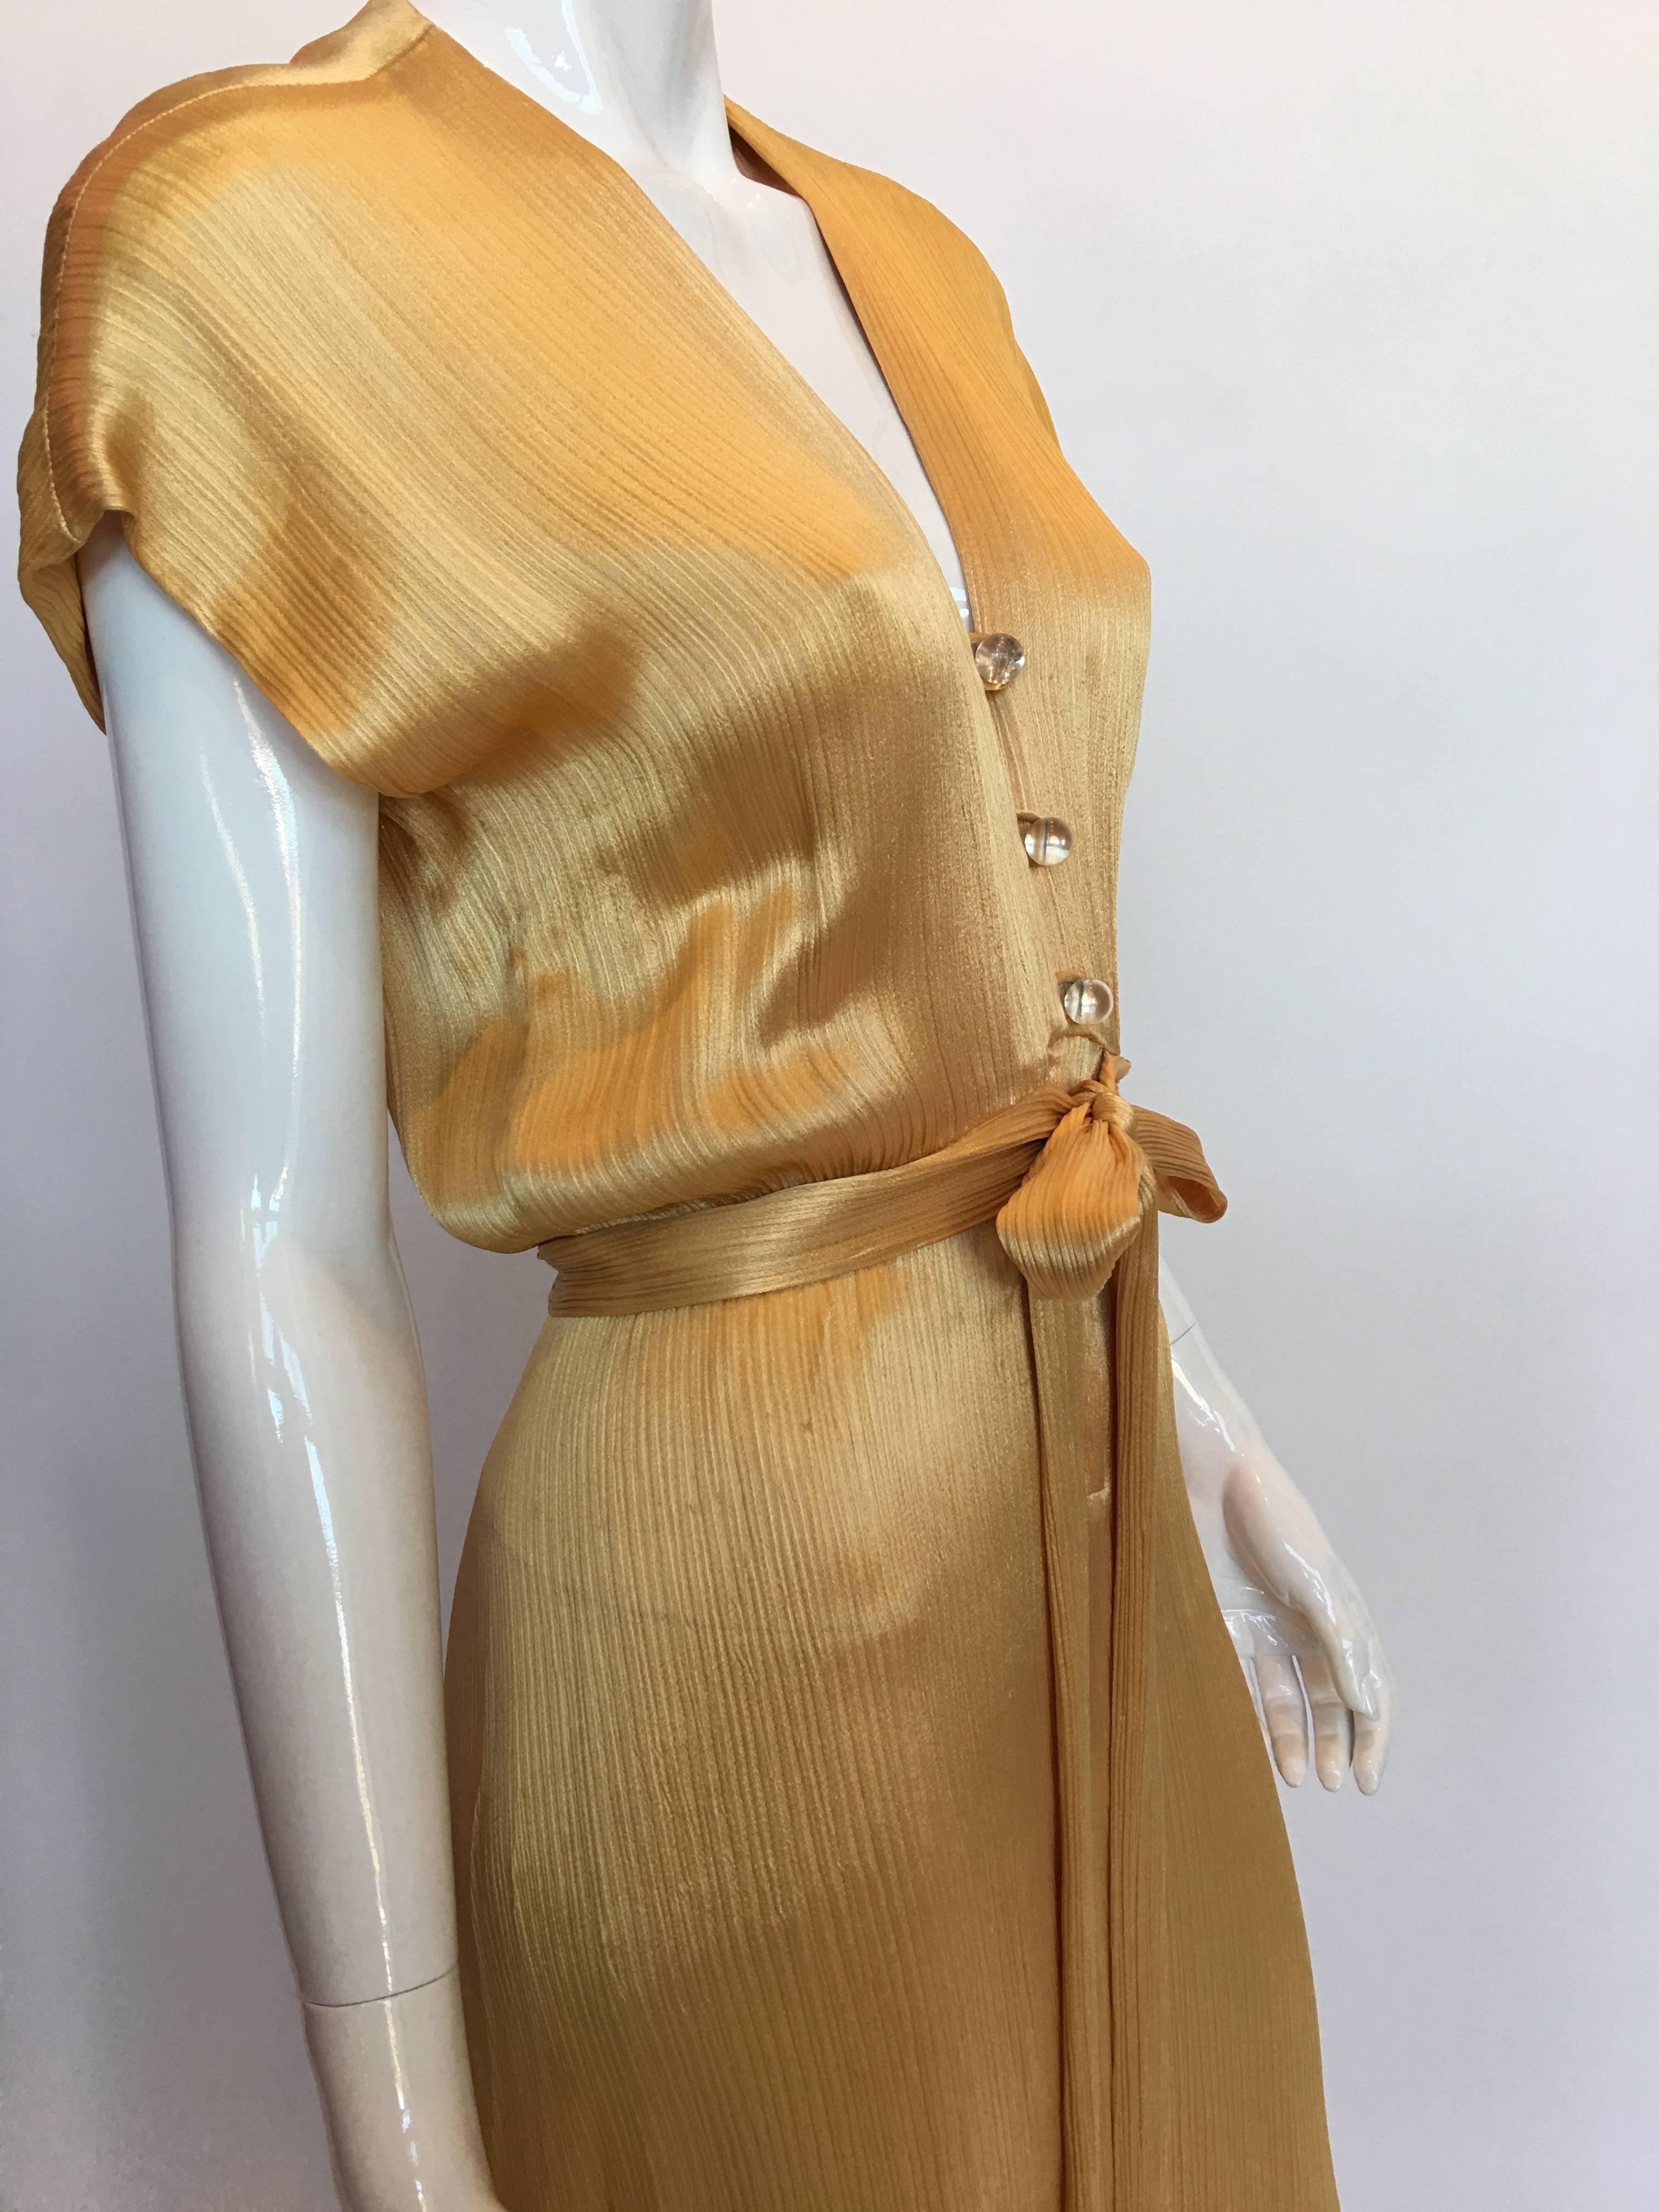 Hollys Harp 1970's Gold Silk Evening Gown

Size label: S

Measurements taken flat:
Shoulders: 24.5